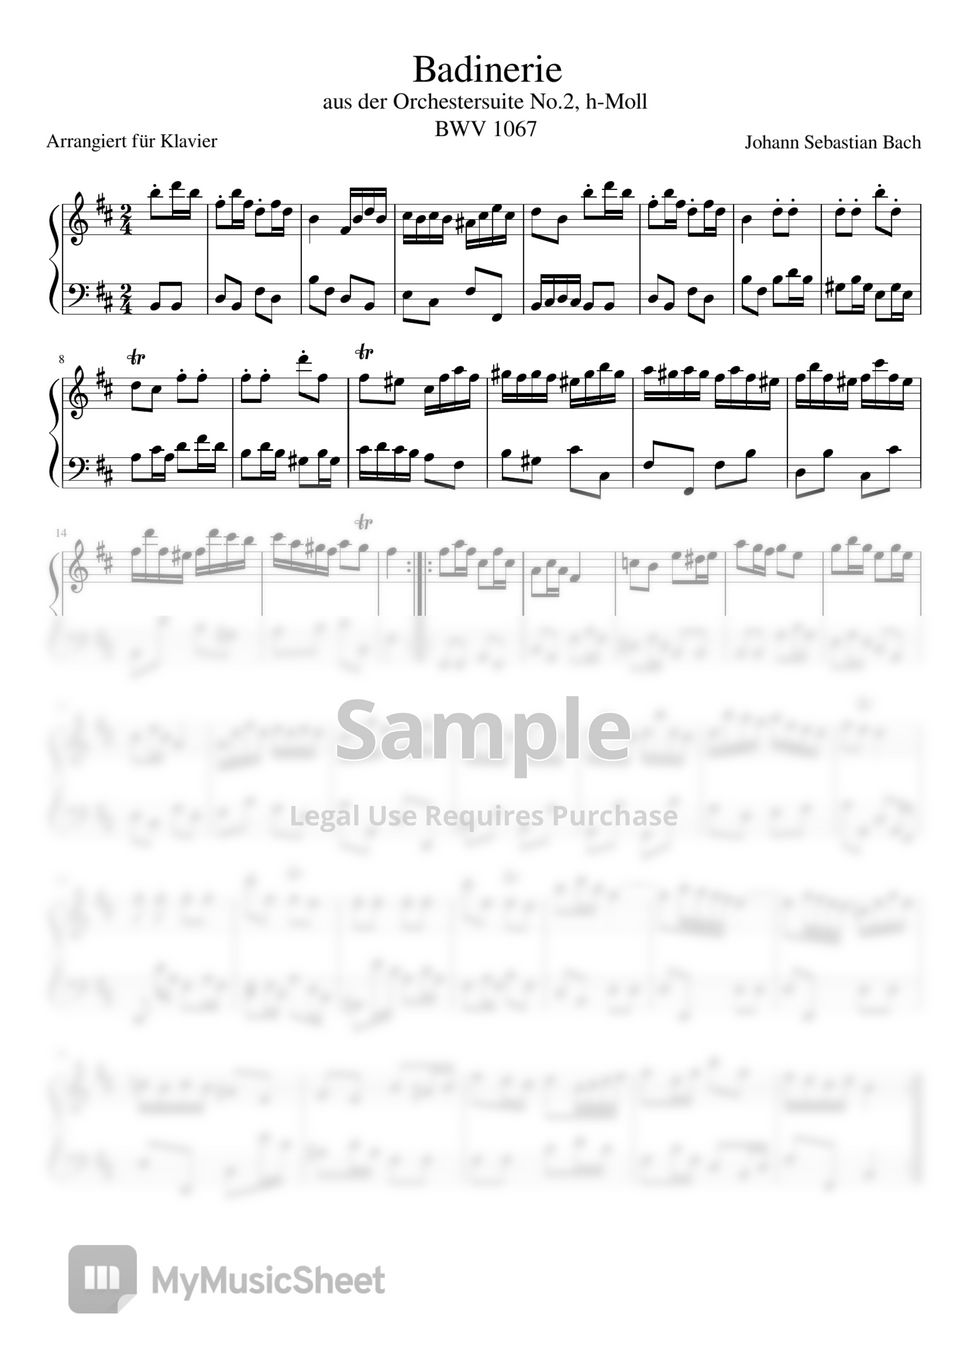 J.S.Bach - Badinerie 楽譜 by J.S.Bach